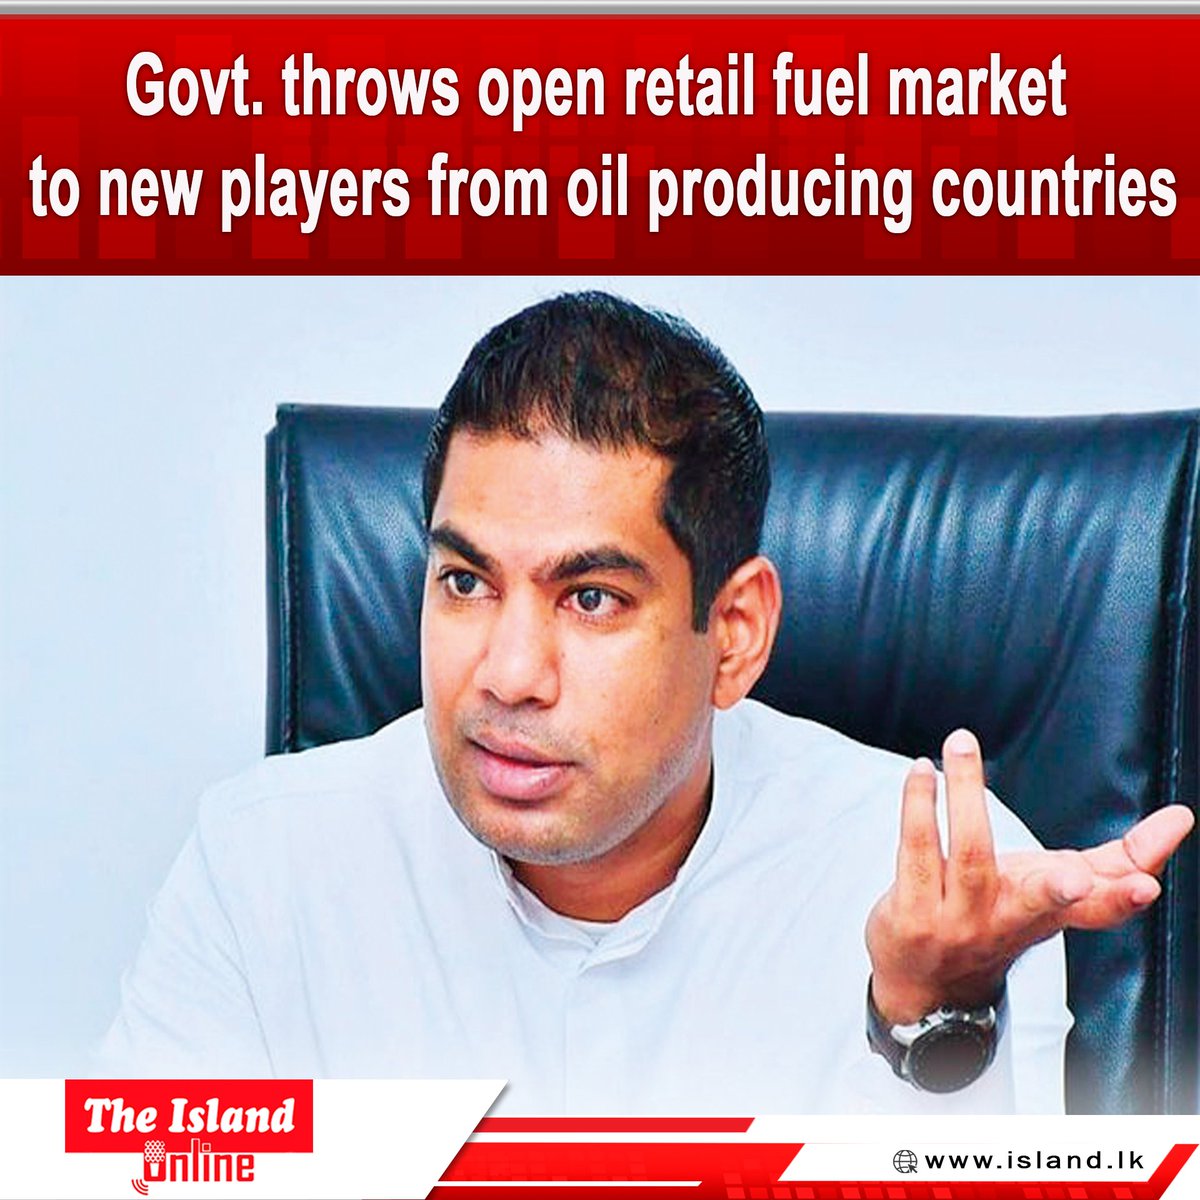 Govt. throws open retail fuel market to new players from oil producing countries

bit.ly/3Agnc5R

#TheIsland #TheIslandnewspaper #TheIslandOnline #SriLankaGovt #openretail #fuelmarket #newplayers #KanchanaWijesekera #FuelCrisis #SriLankaCrisis #SriLankaEconomicCrisis